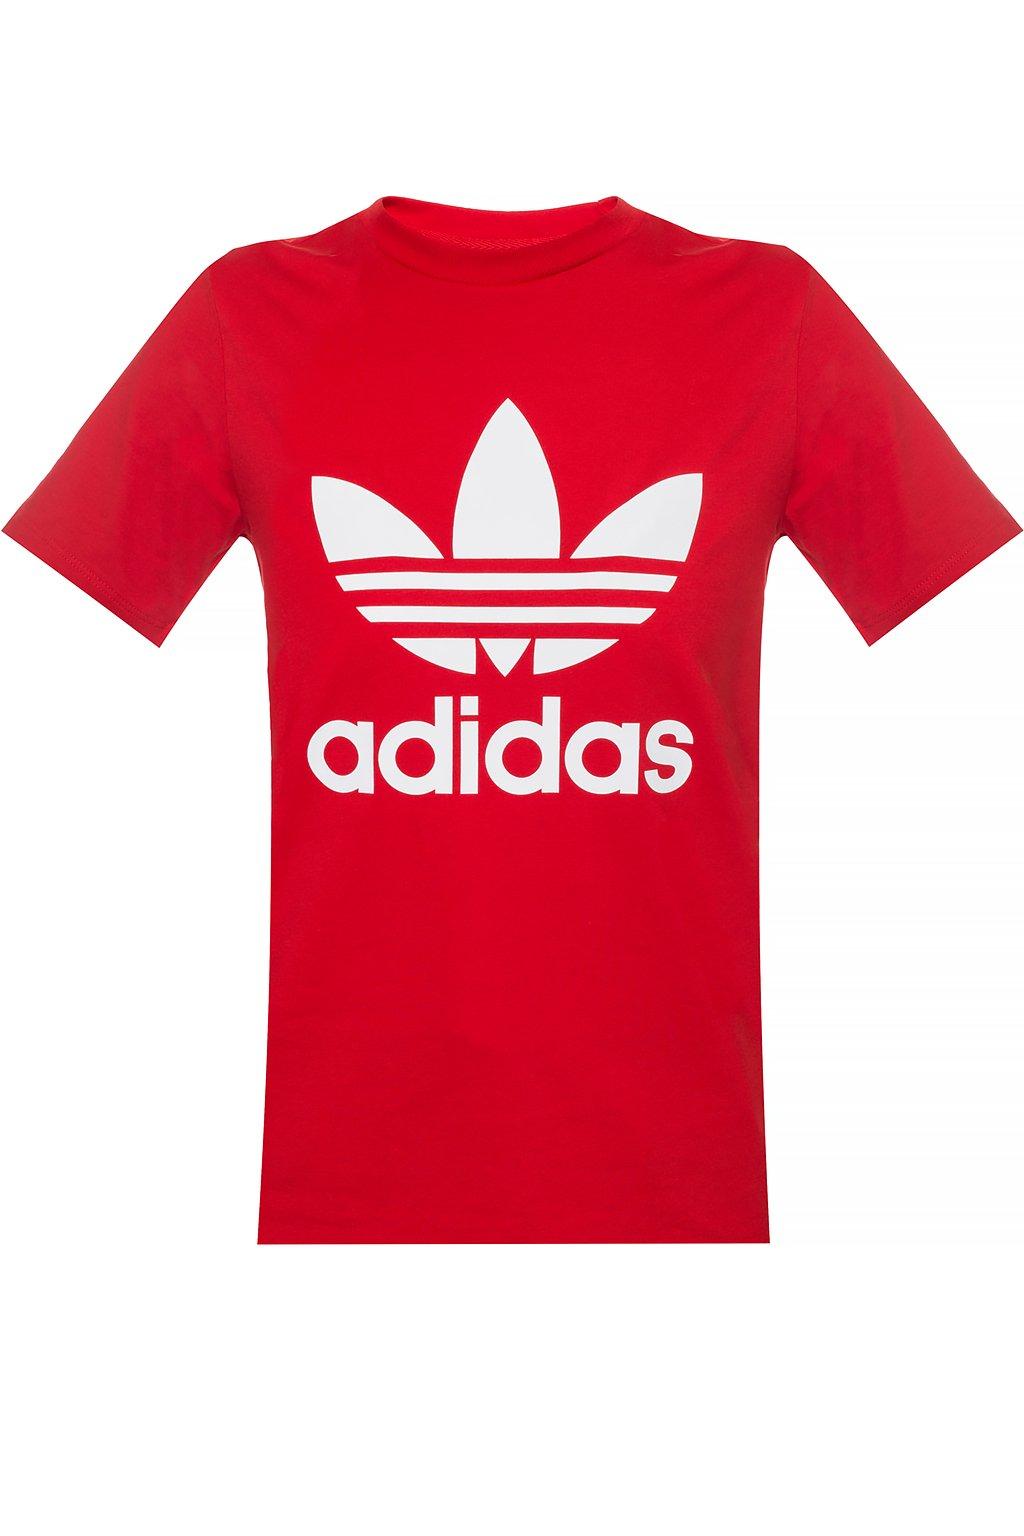 adidas Originals Cotton Logo-printed T-shirt in Red - Lyst